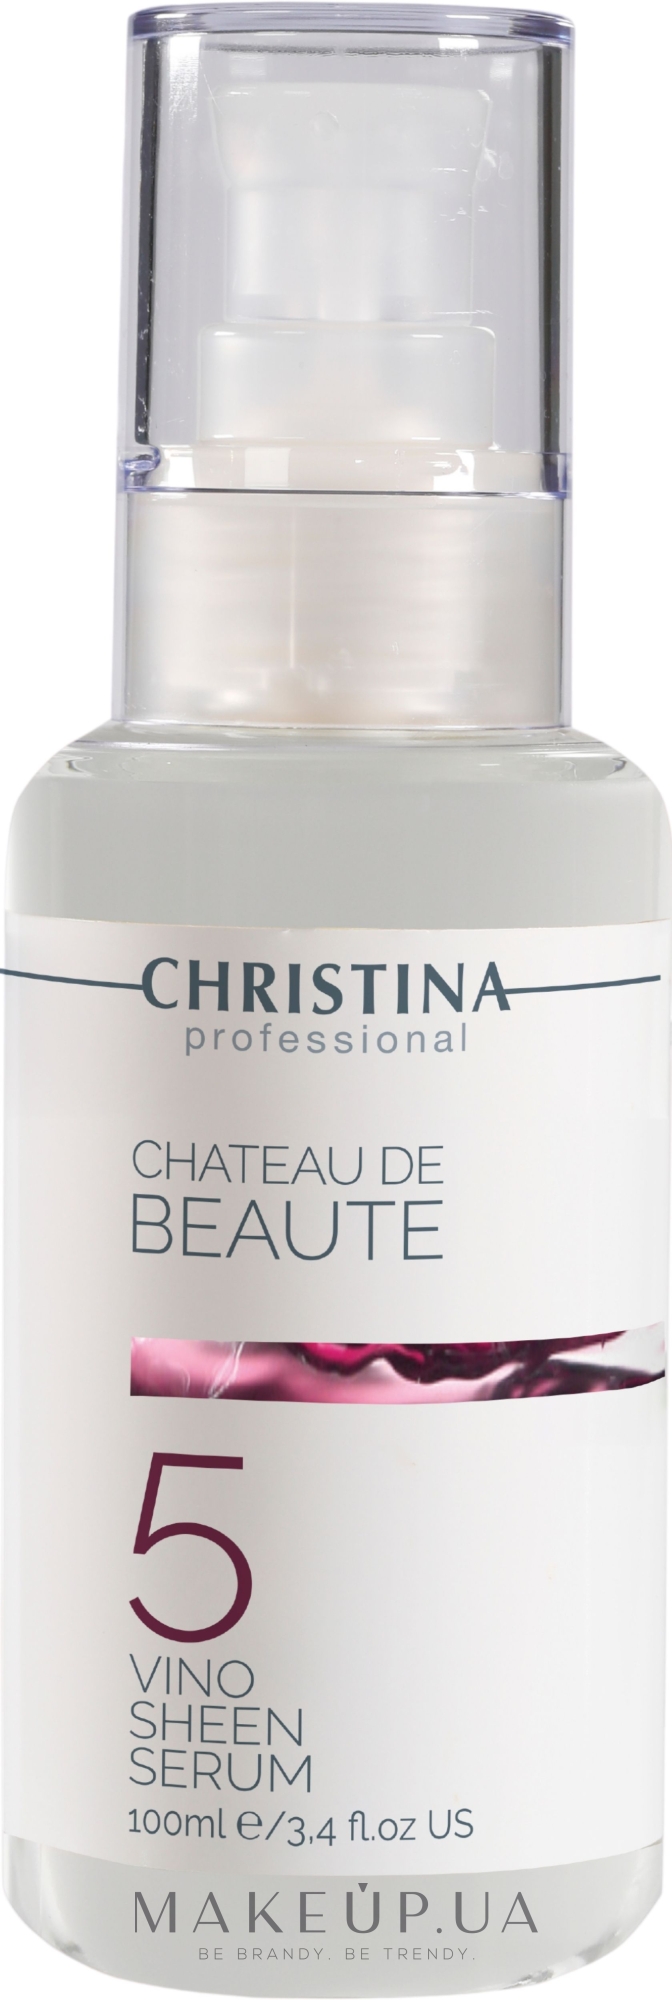 Сыворотка "Великолепие" - Christina Chateau de Beaute Vino Sheen Serum — фото 100ml